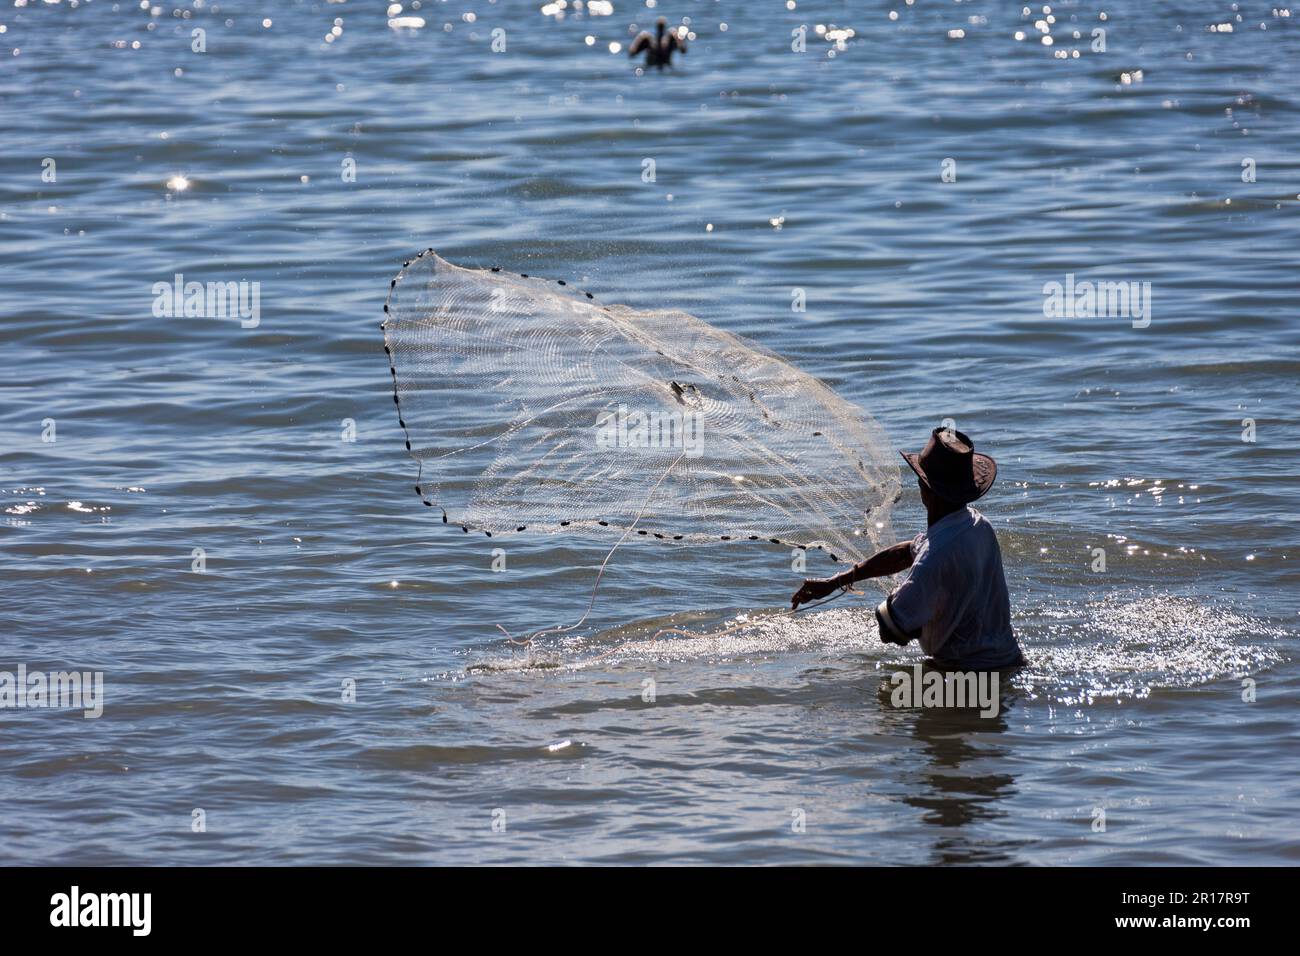 https://c8.alamy.com/comp/2R17R9T/fisherman-spreading-fishing-net-for-catching-fish-in-sea-samara-costa-rica-2R17R9T.jpg